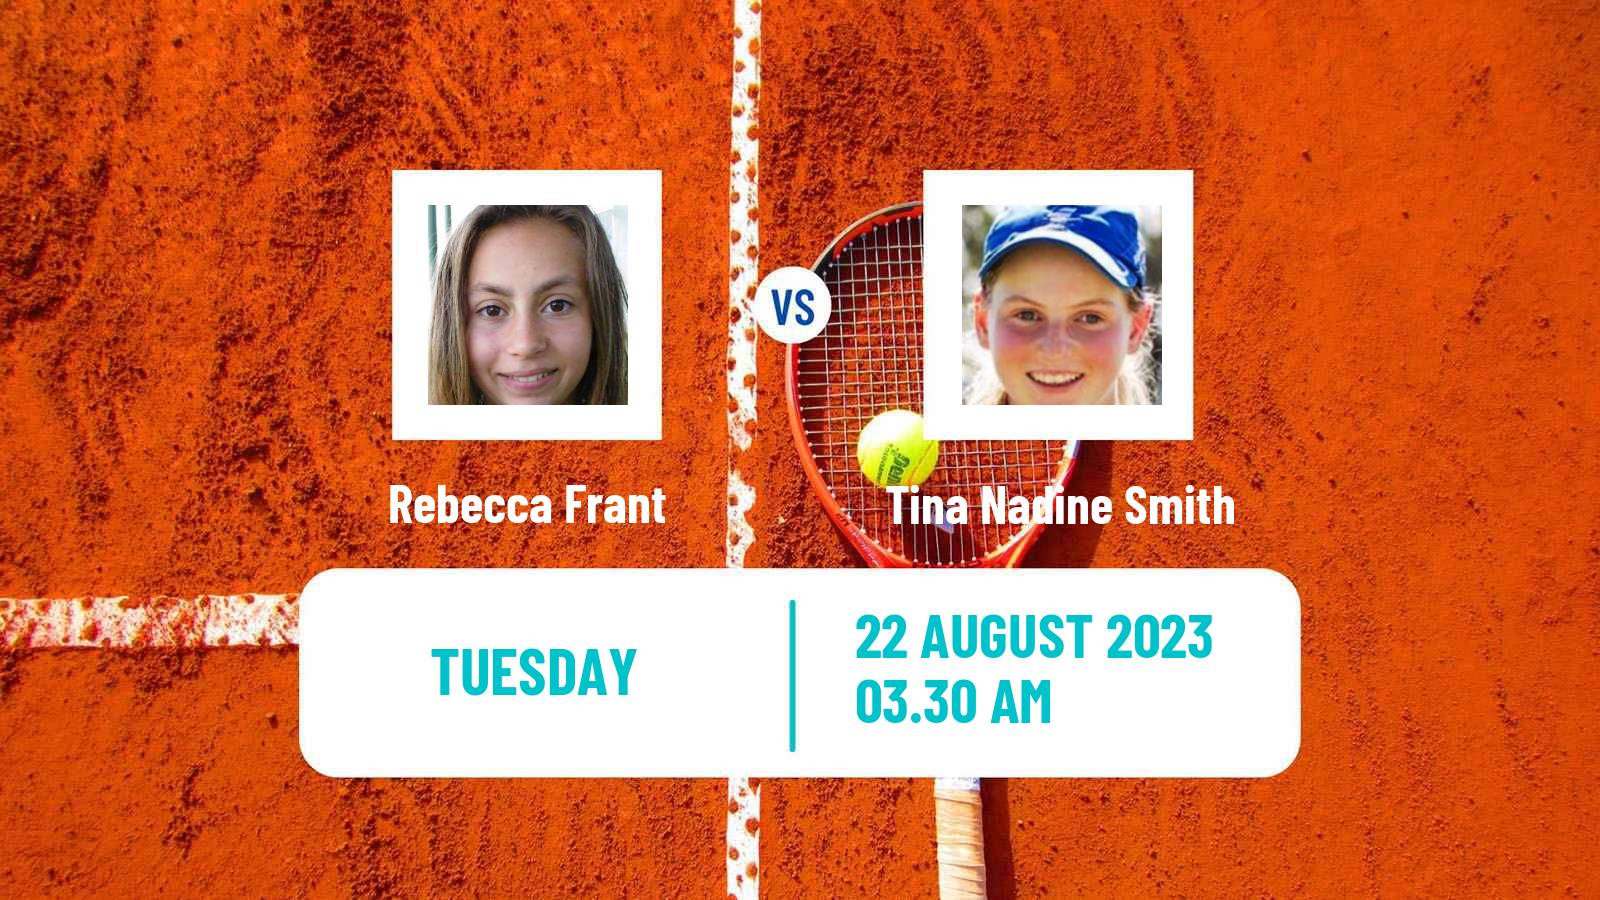 Tennis ITF W25 Verbier Women Rebecca Frant - Tina Nadine Smith